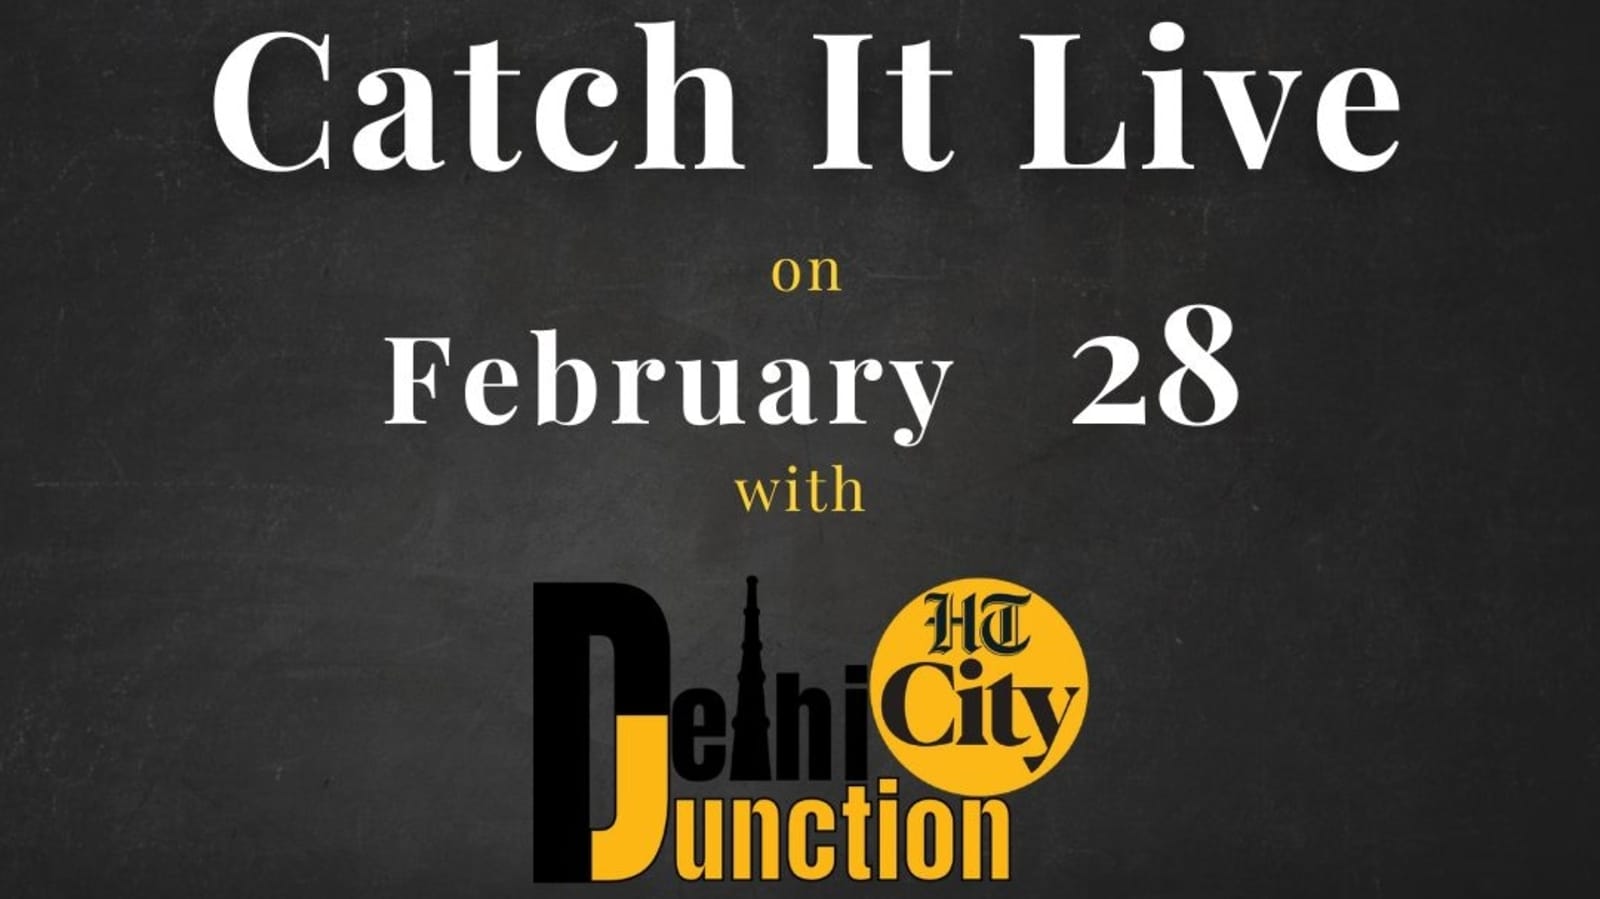 HT City Delhi Junction: Catch It Live on February 28